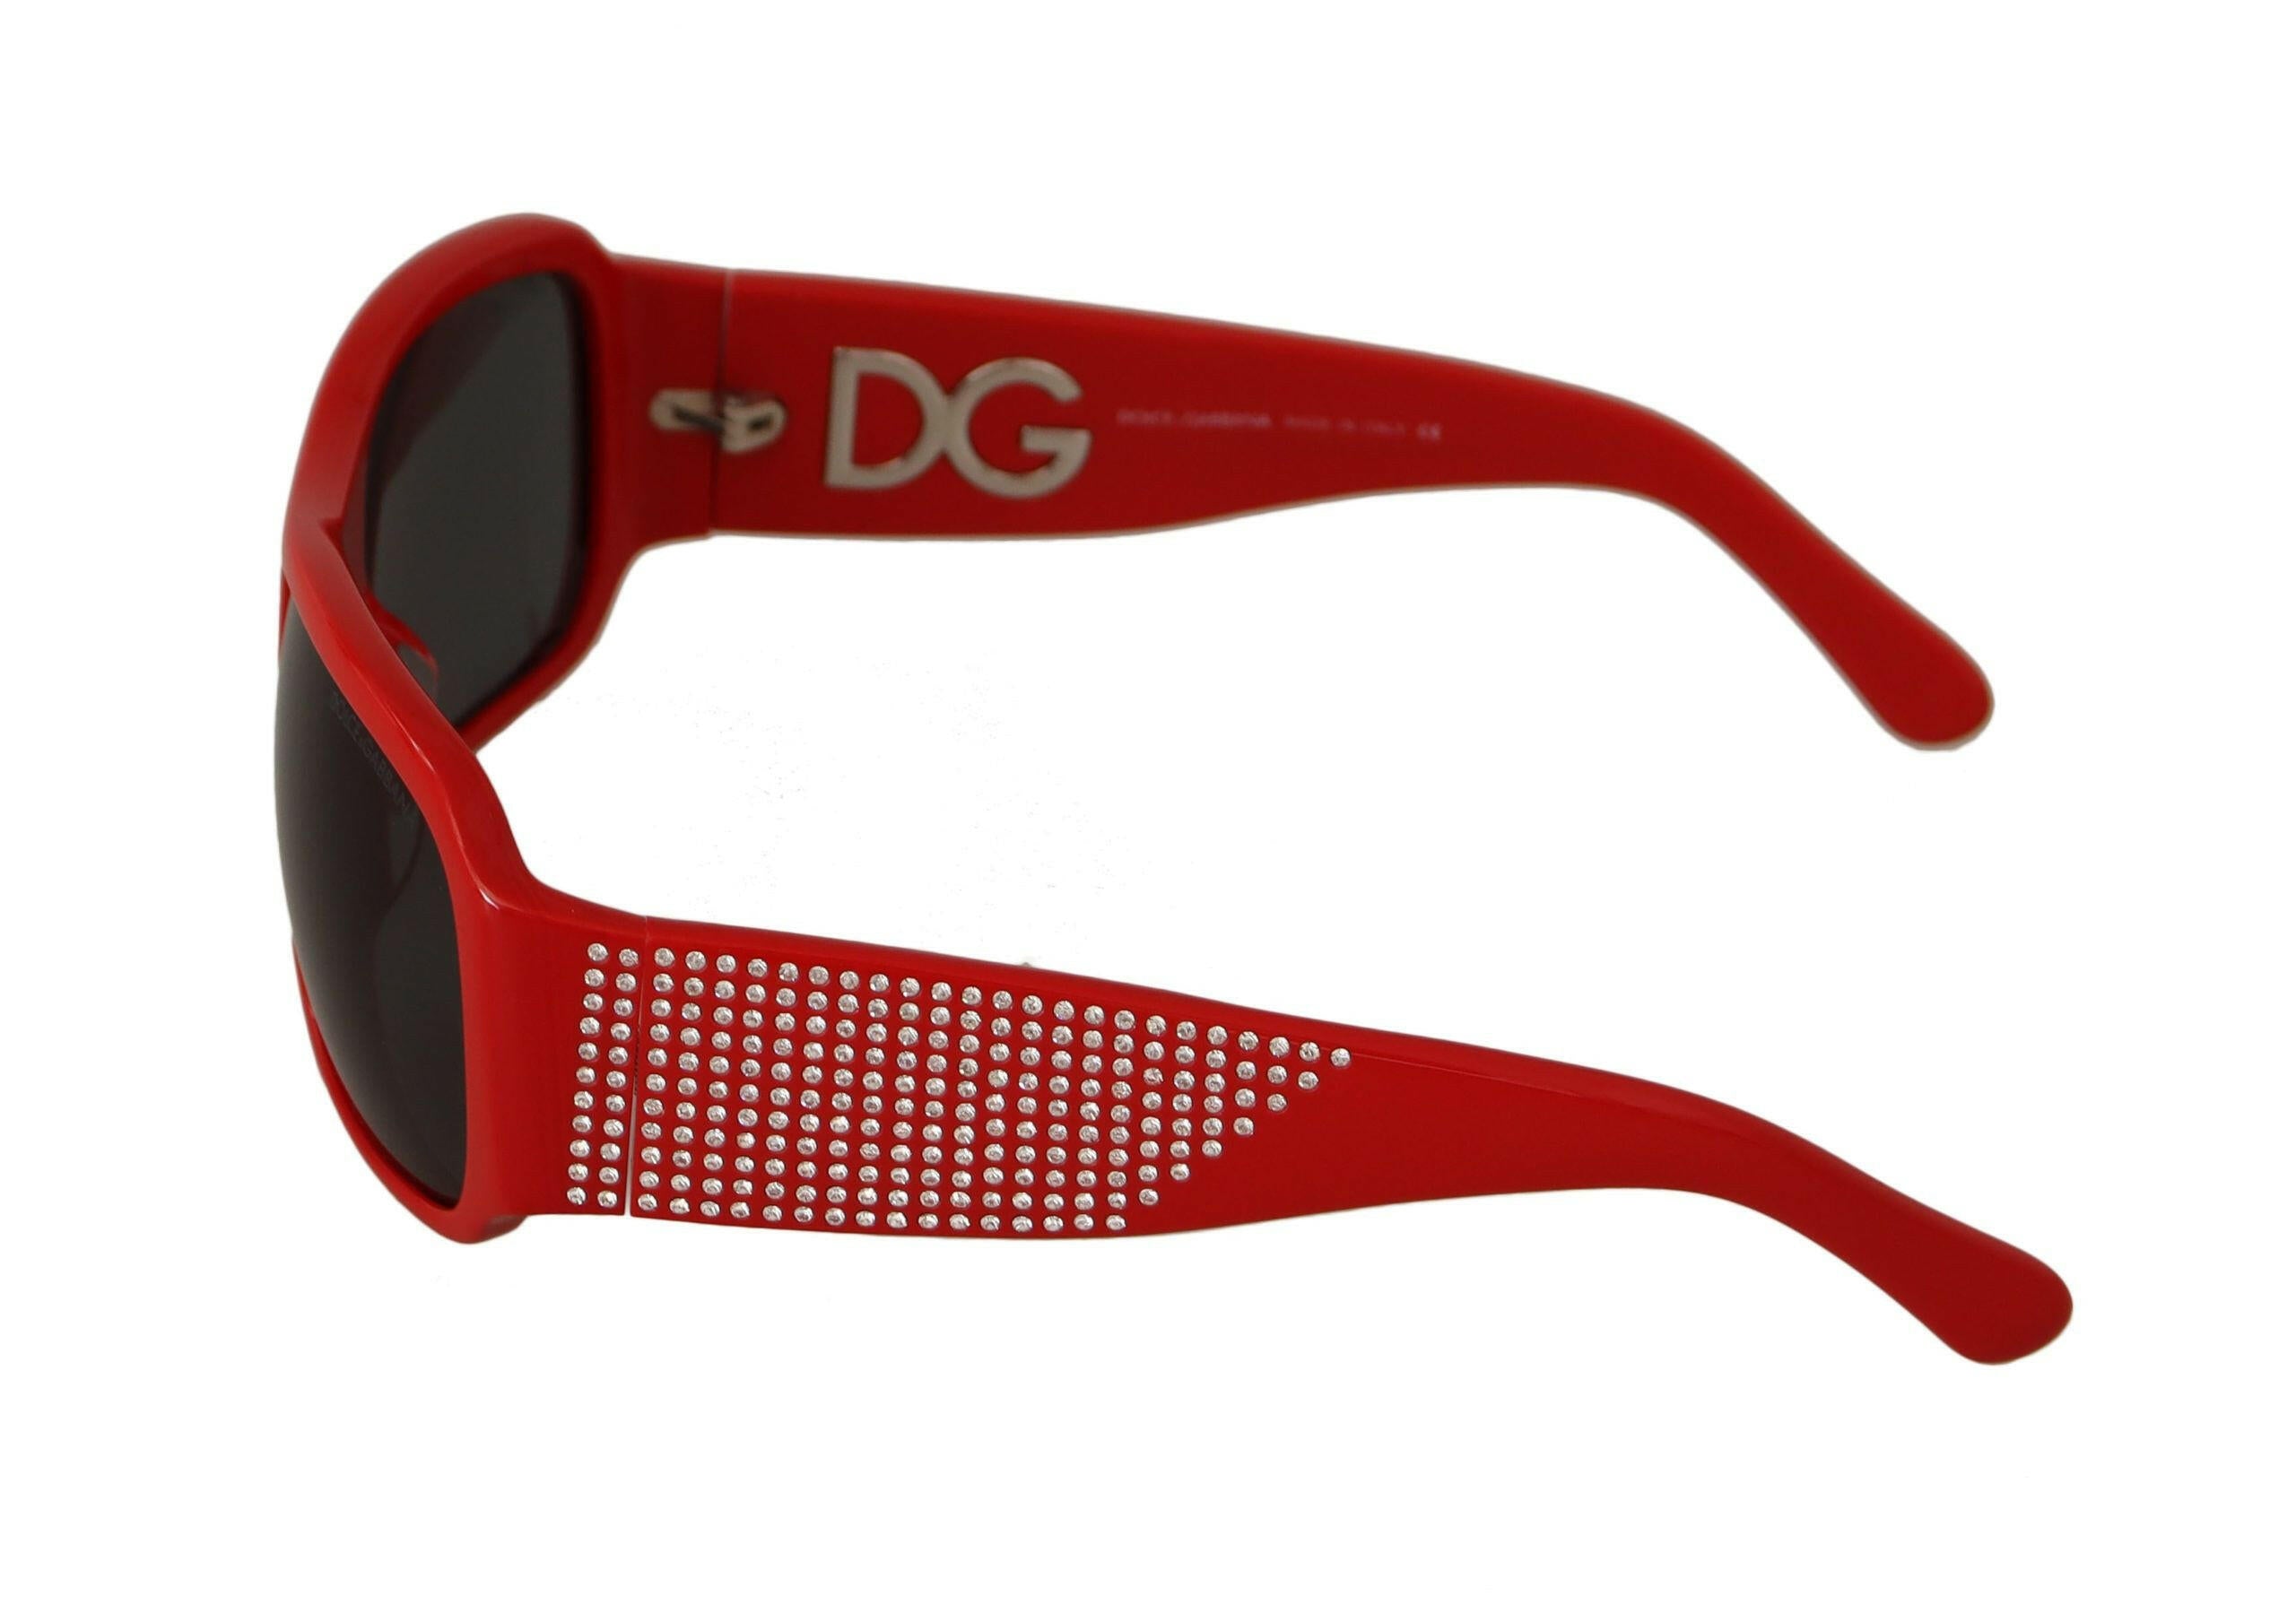 Dolce & Gabbana Red Plastic Swarovski Stones Gray Lens Sunglasses - GENUINE AUTHENTIC BRAND LLC  